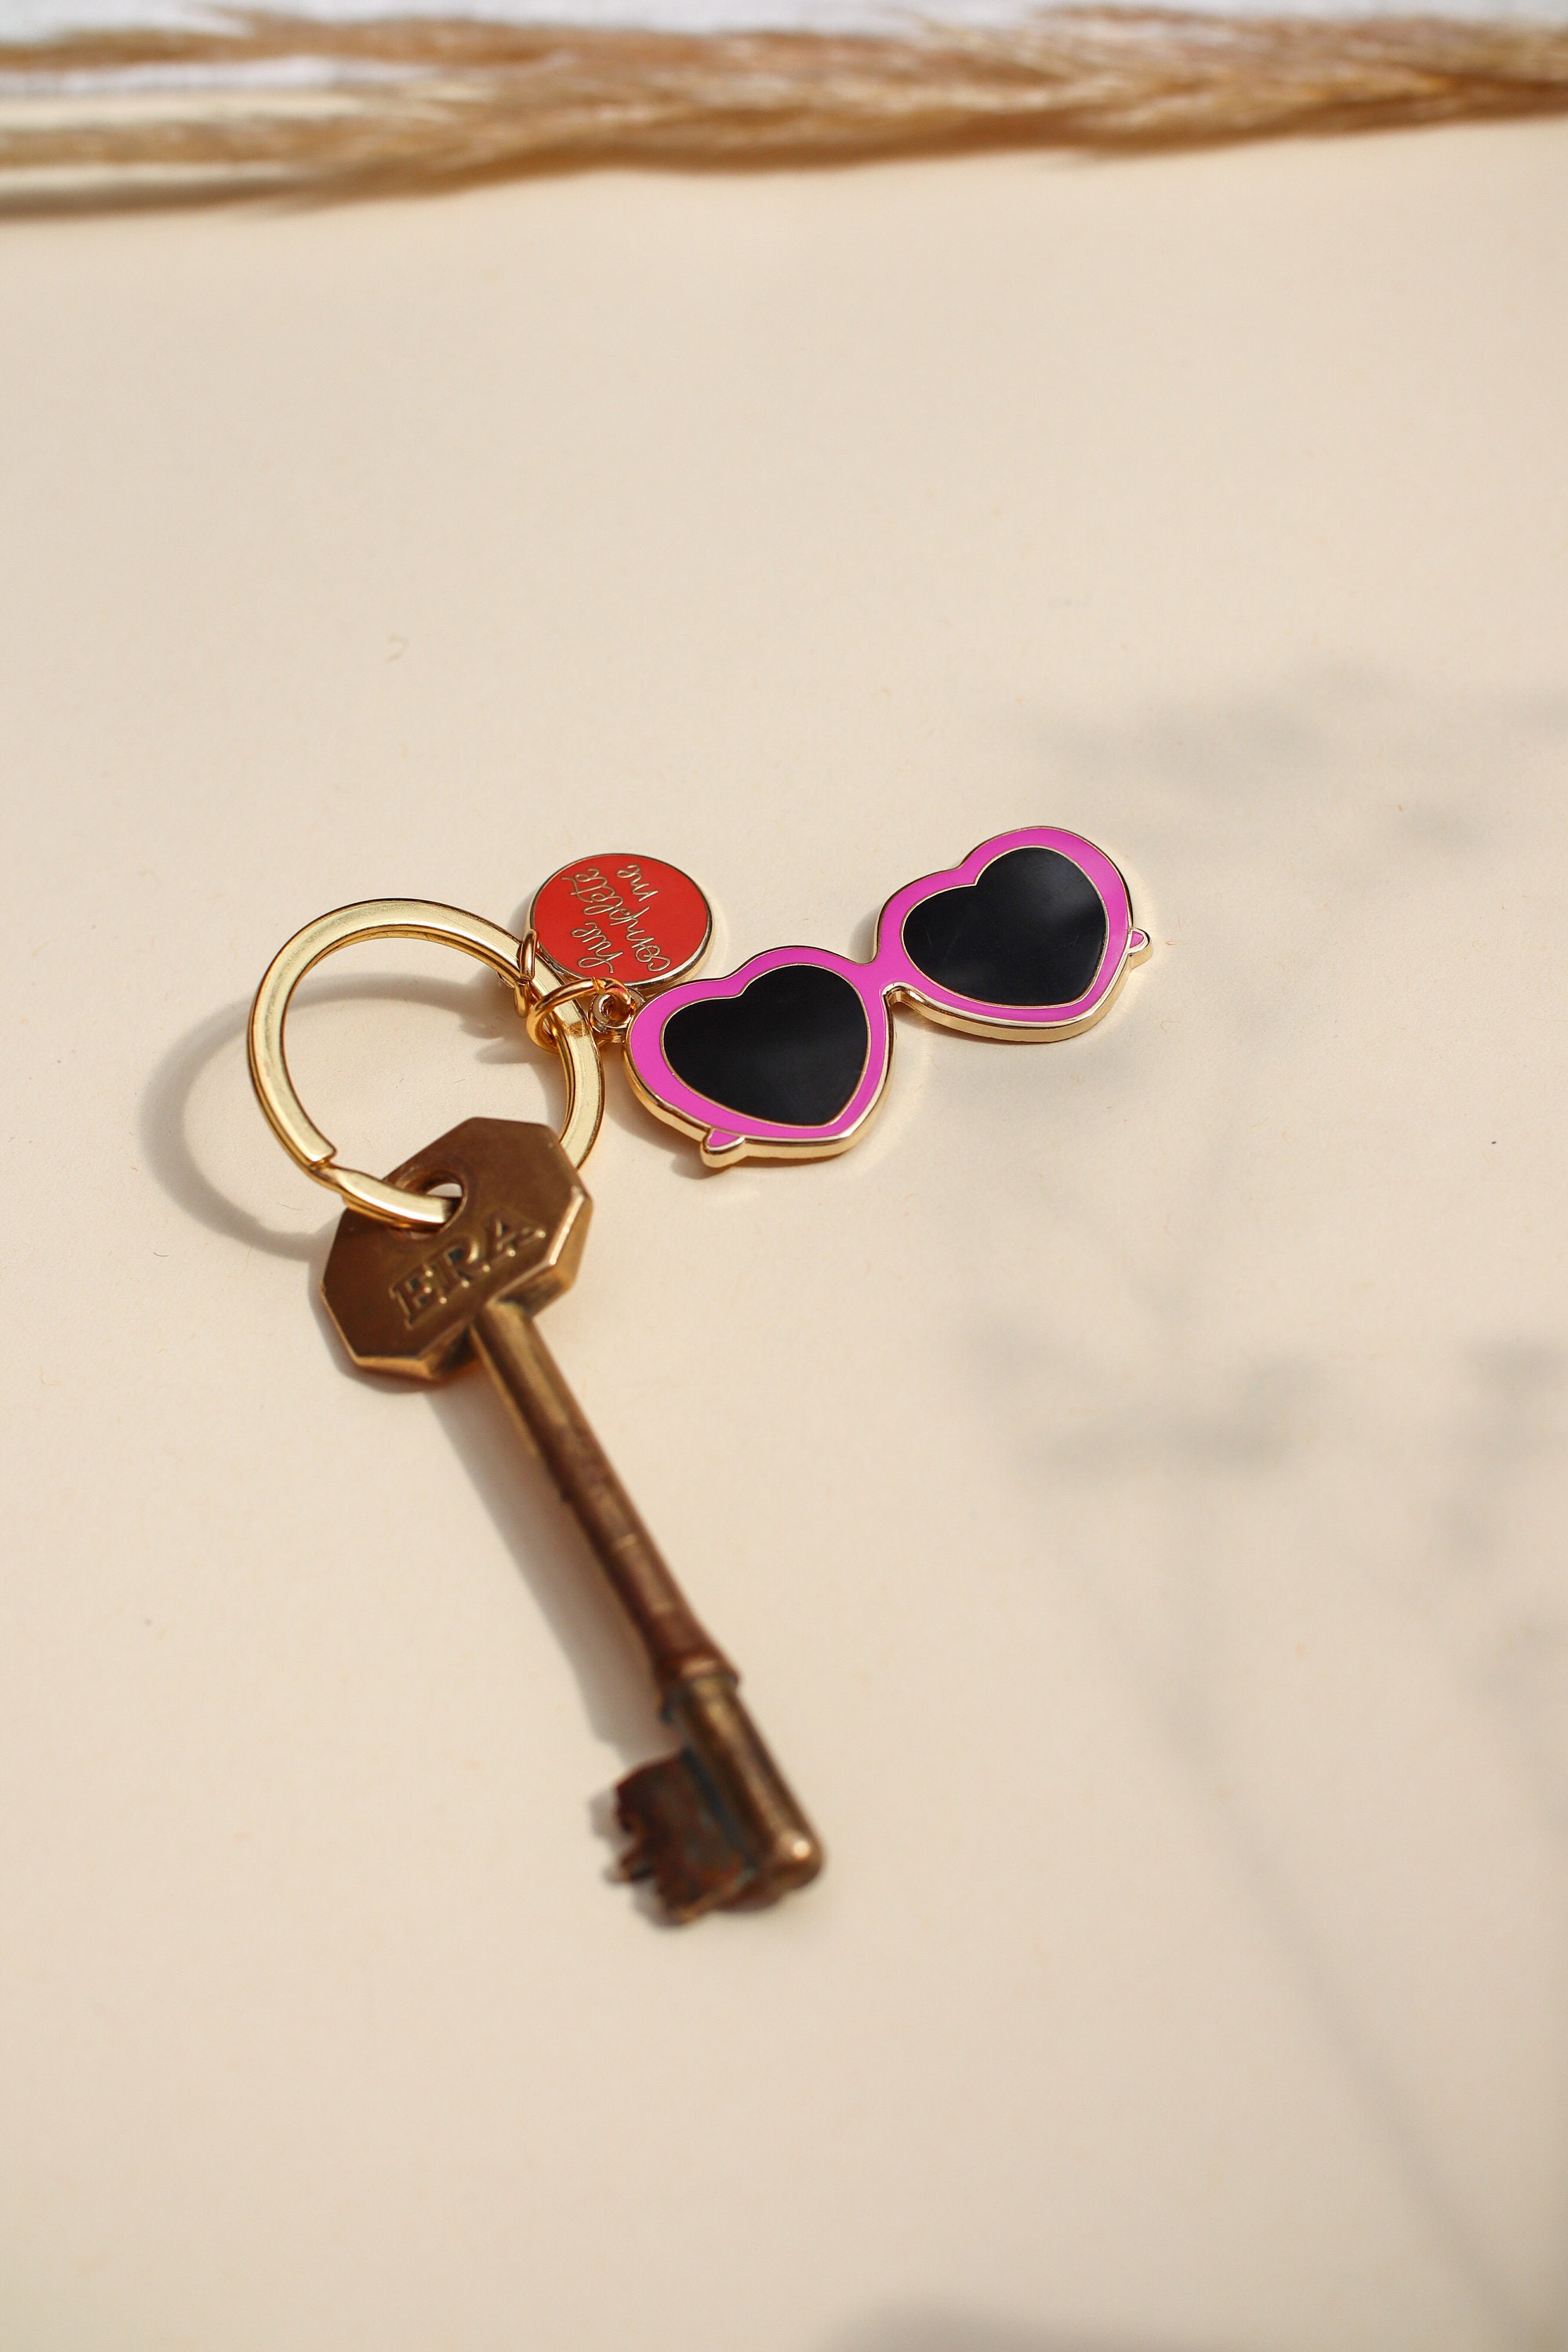 huecompleteme Sunglasses Keychain Heart Glasses Keyring House Keyring Gold Keychain Accessories for Car Keys Enamel Keychain Illustrated Keyring